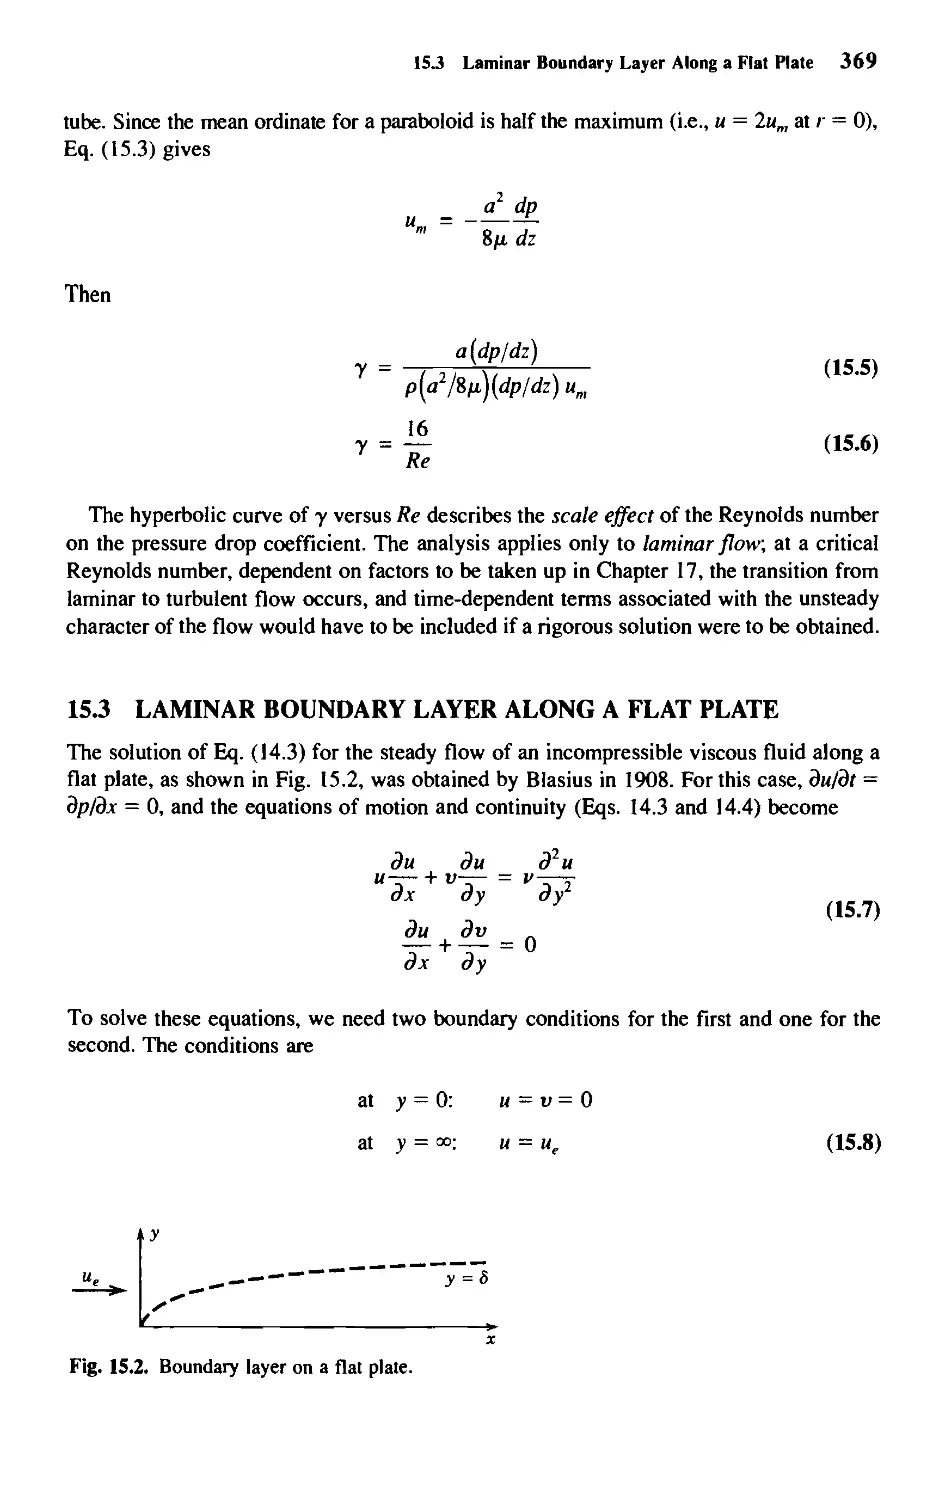 15.3 - Laminar Boundary Layer Along a Flat Plate